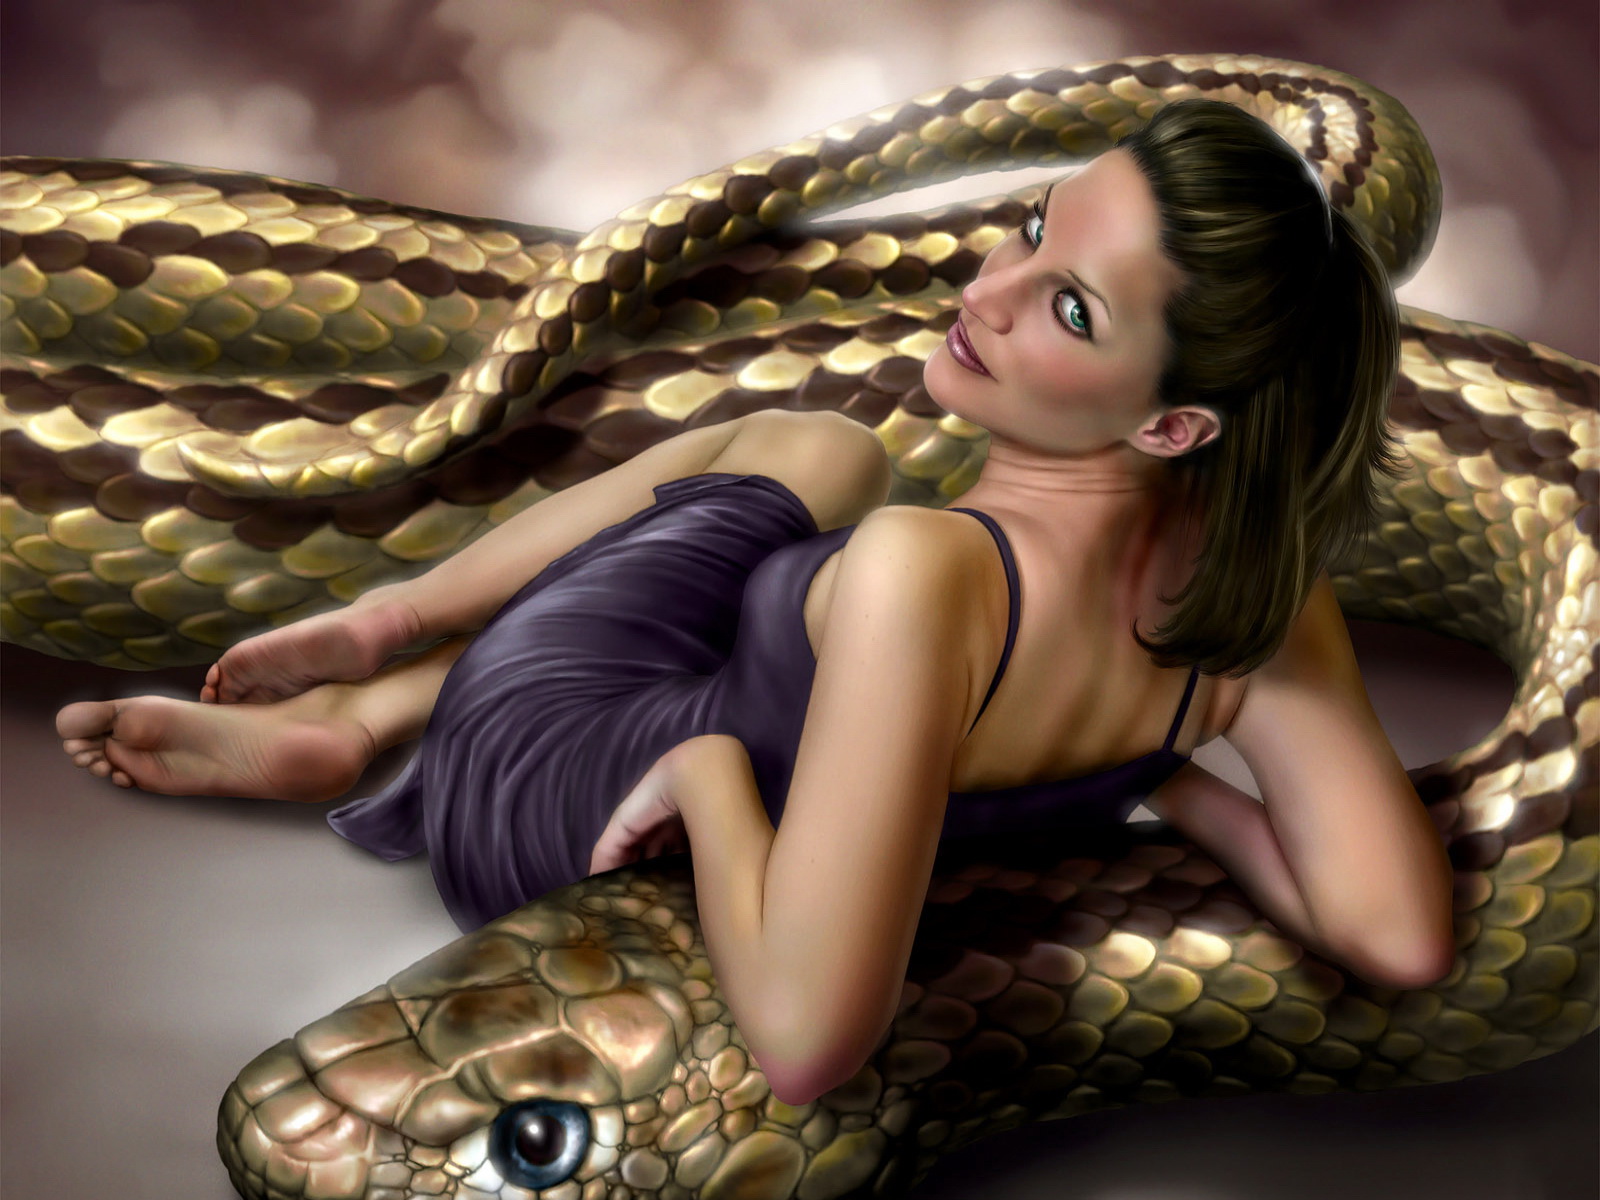 Girl With Anaconda Fantasy Wallpaper Background O K U